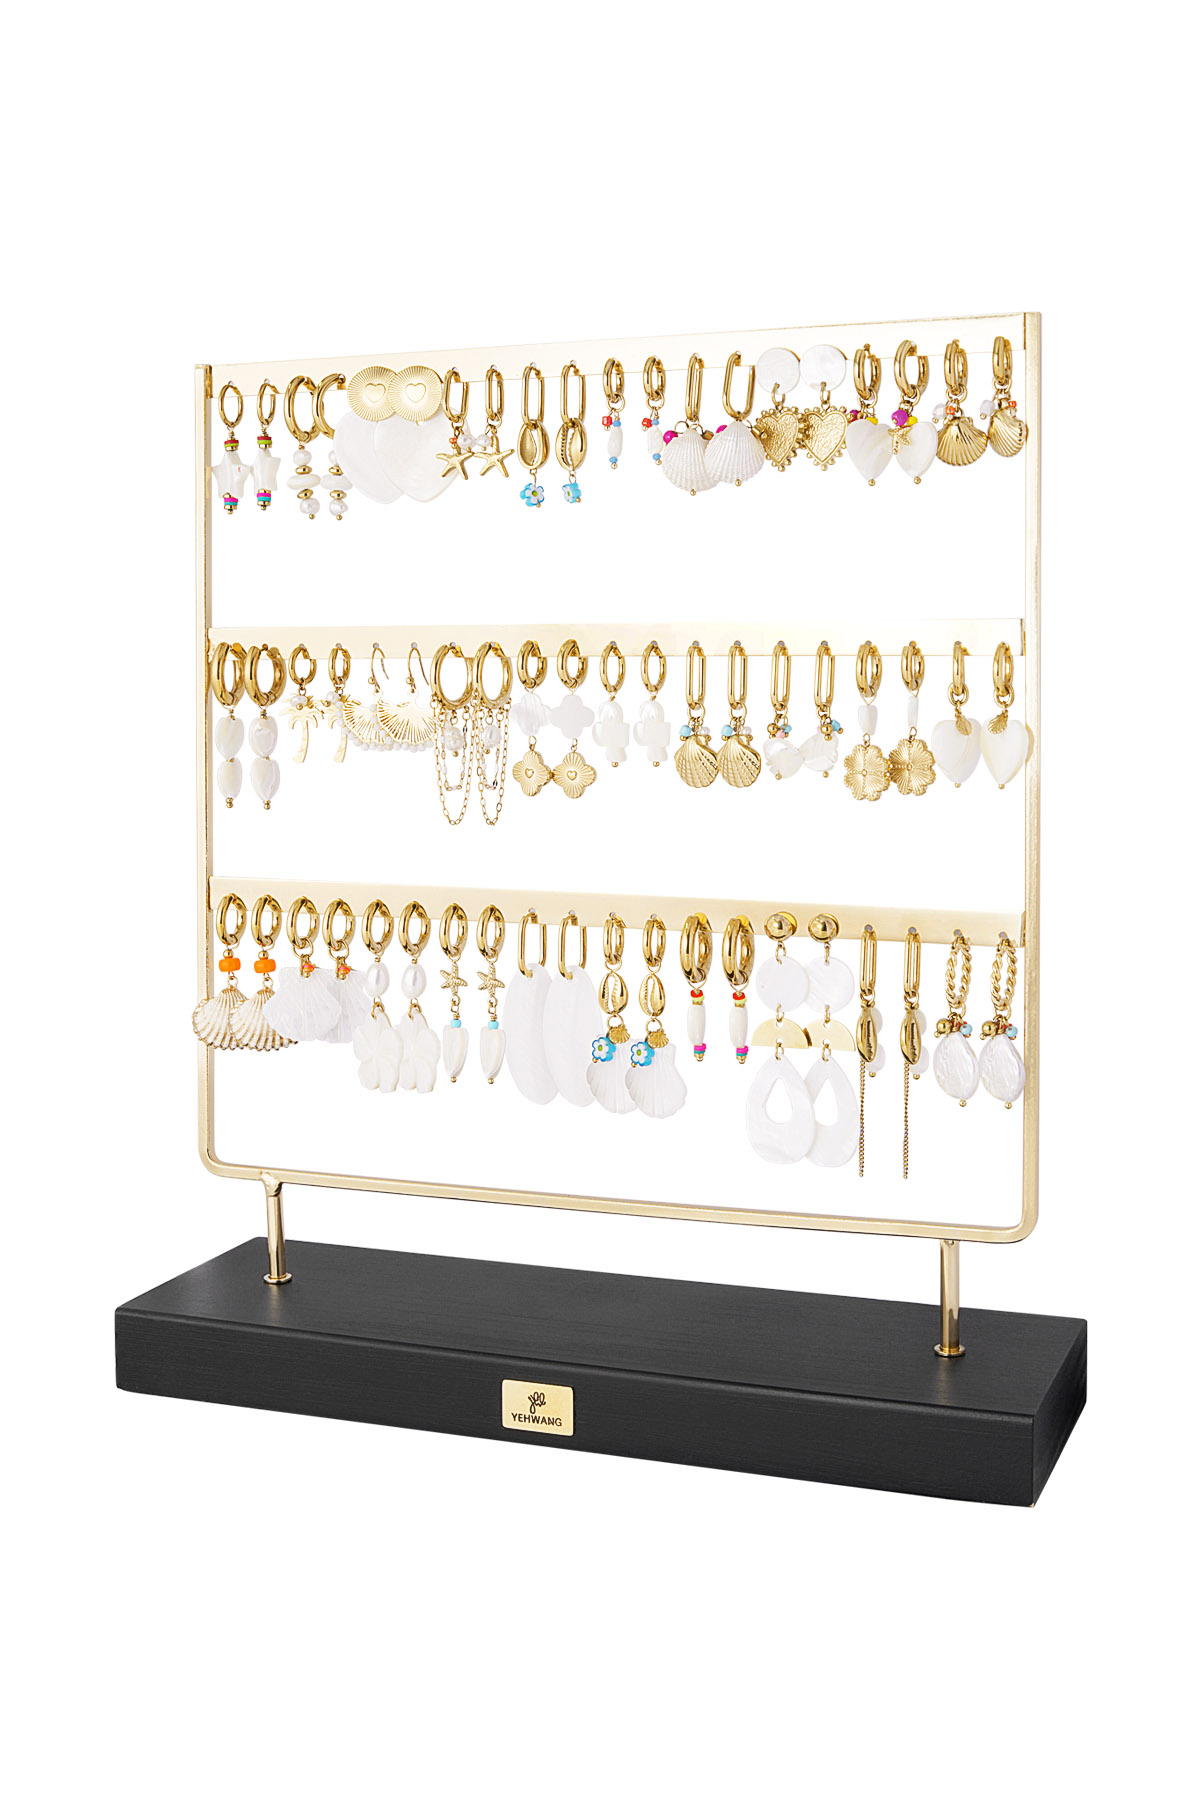 Display earrings charms & seashell - gold 